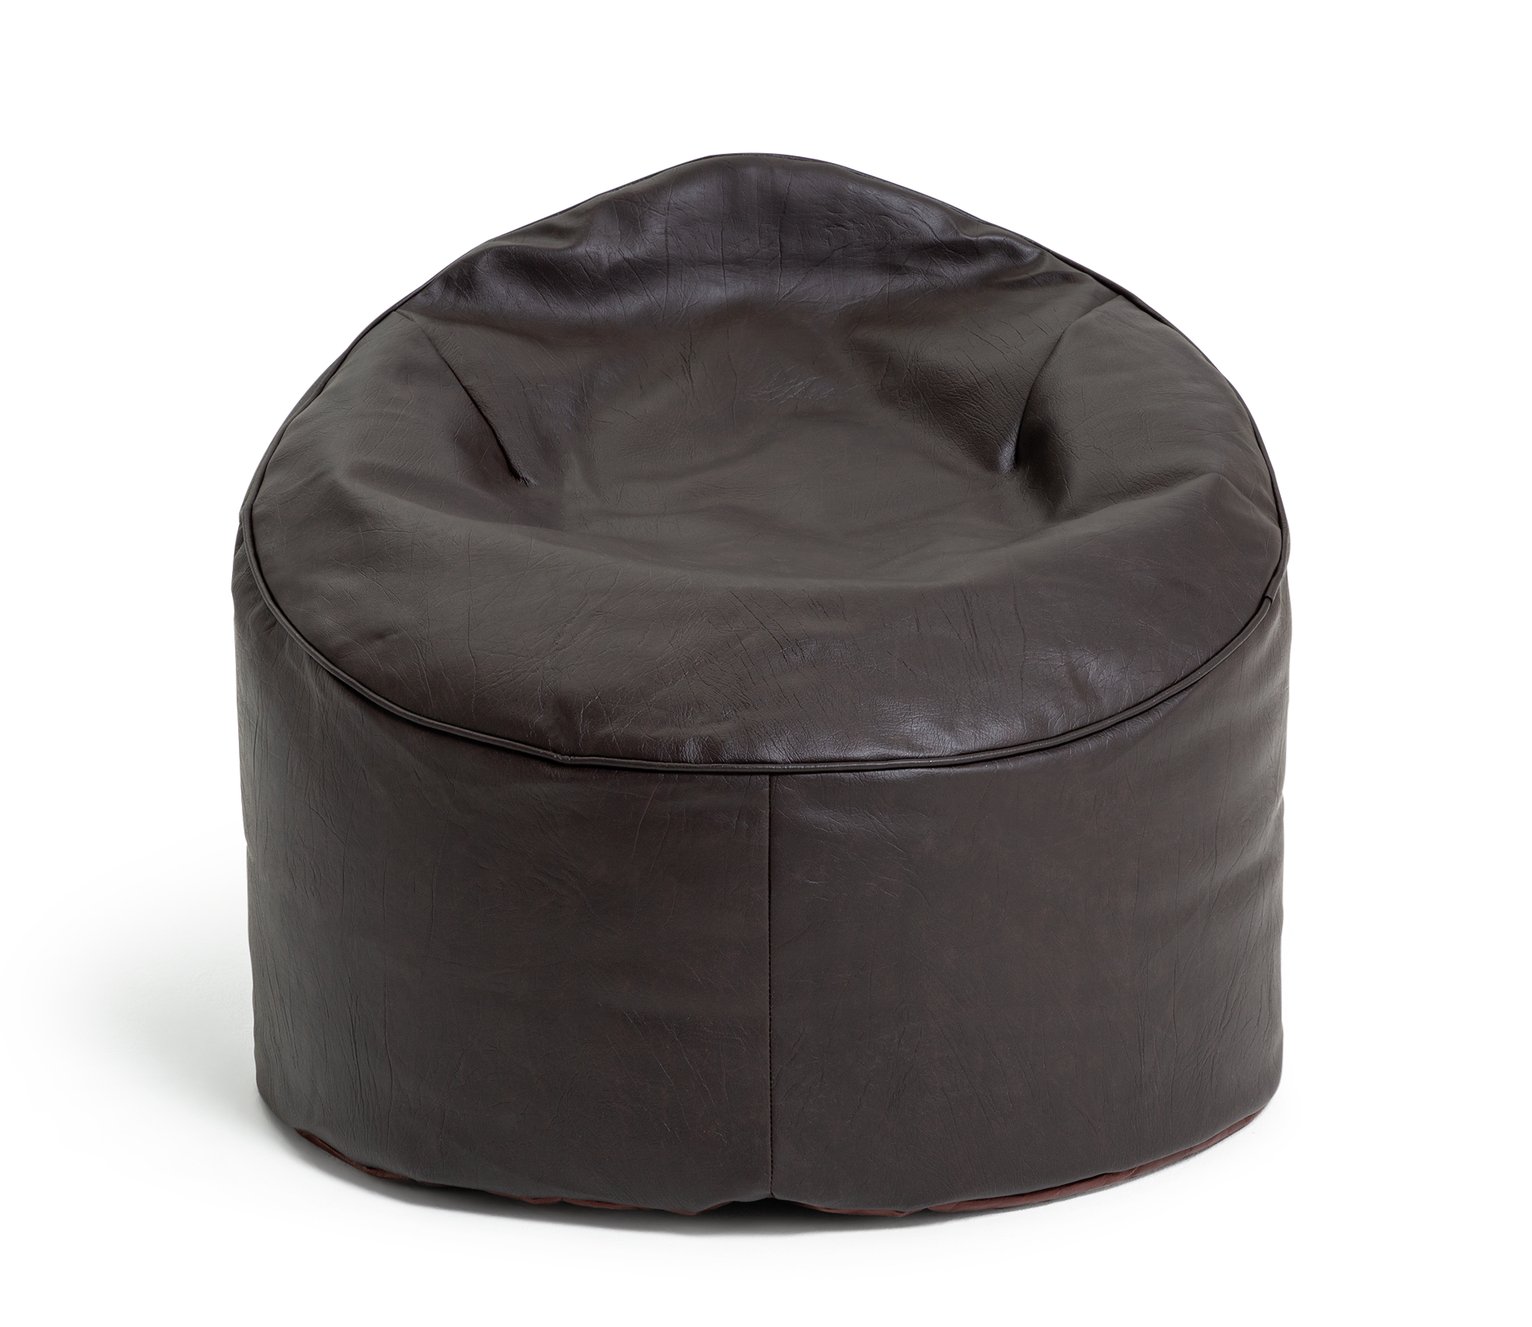 Habitat Faux Leather Bean Bag Chair - Chocolate